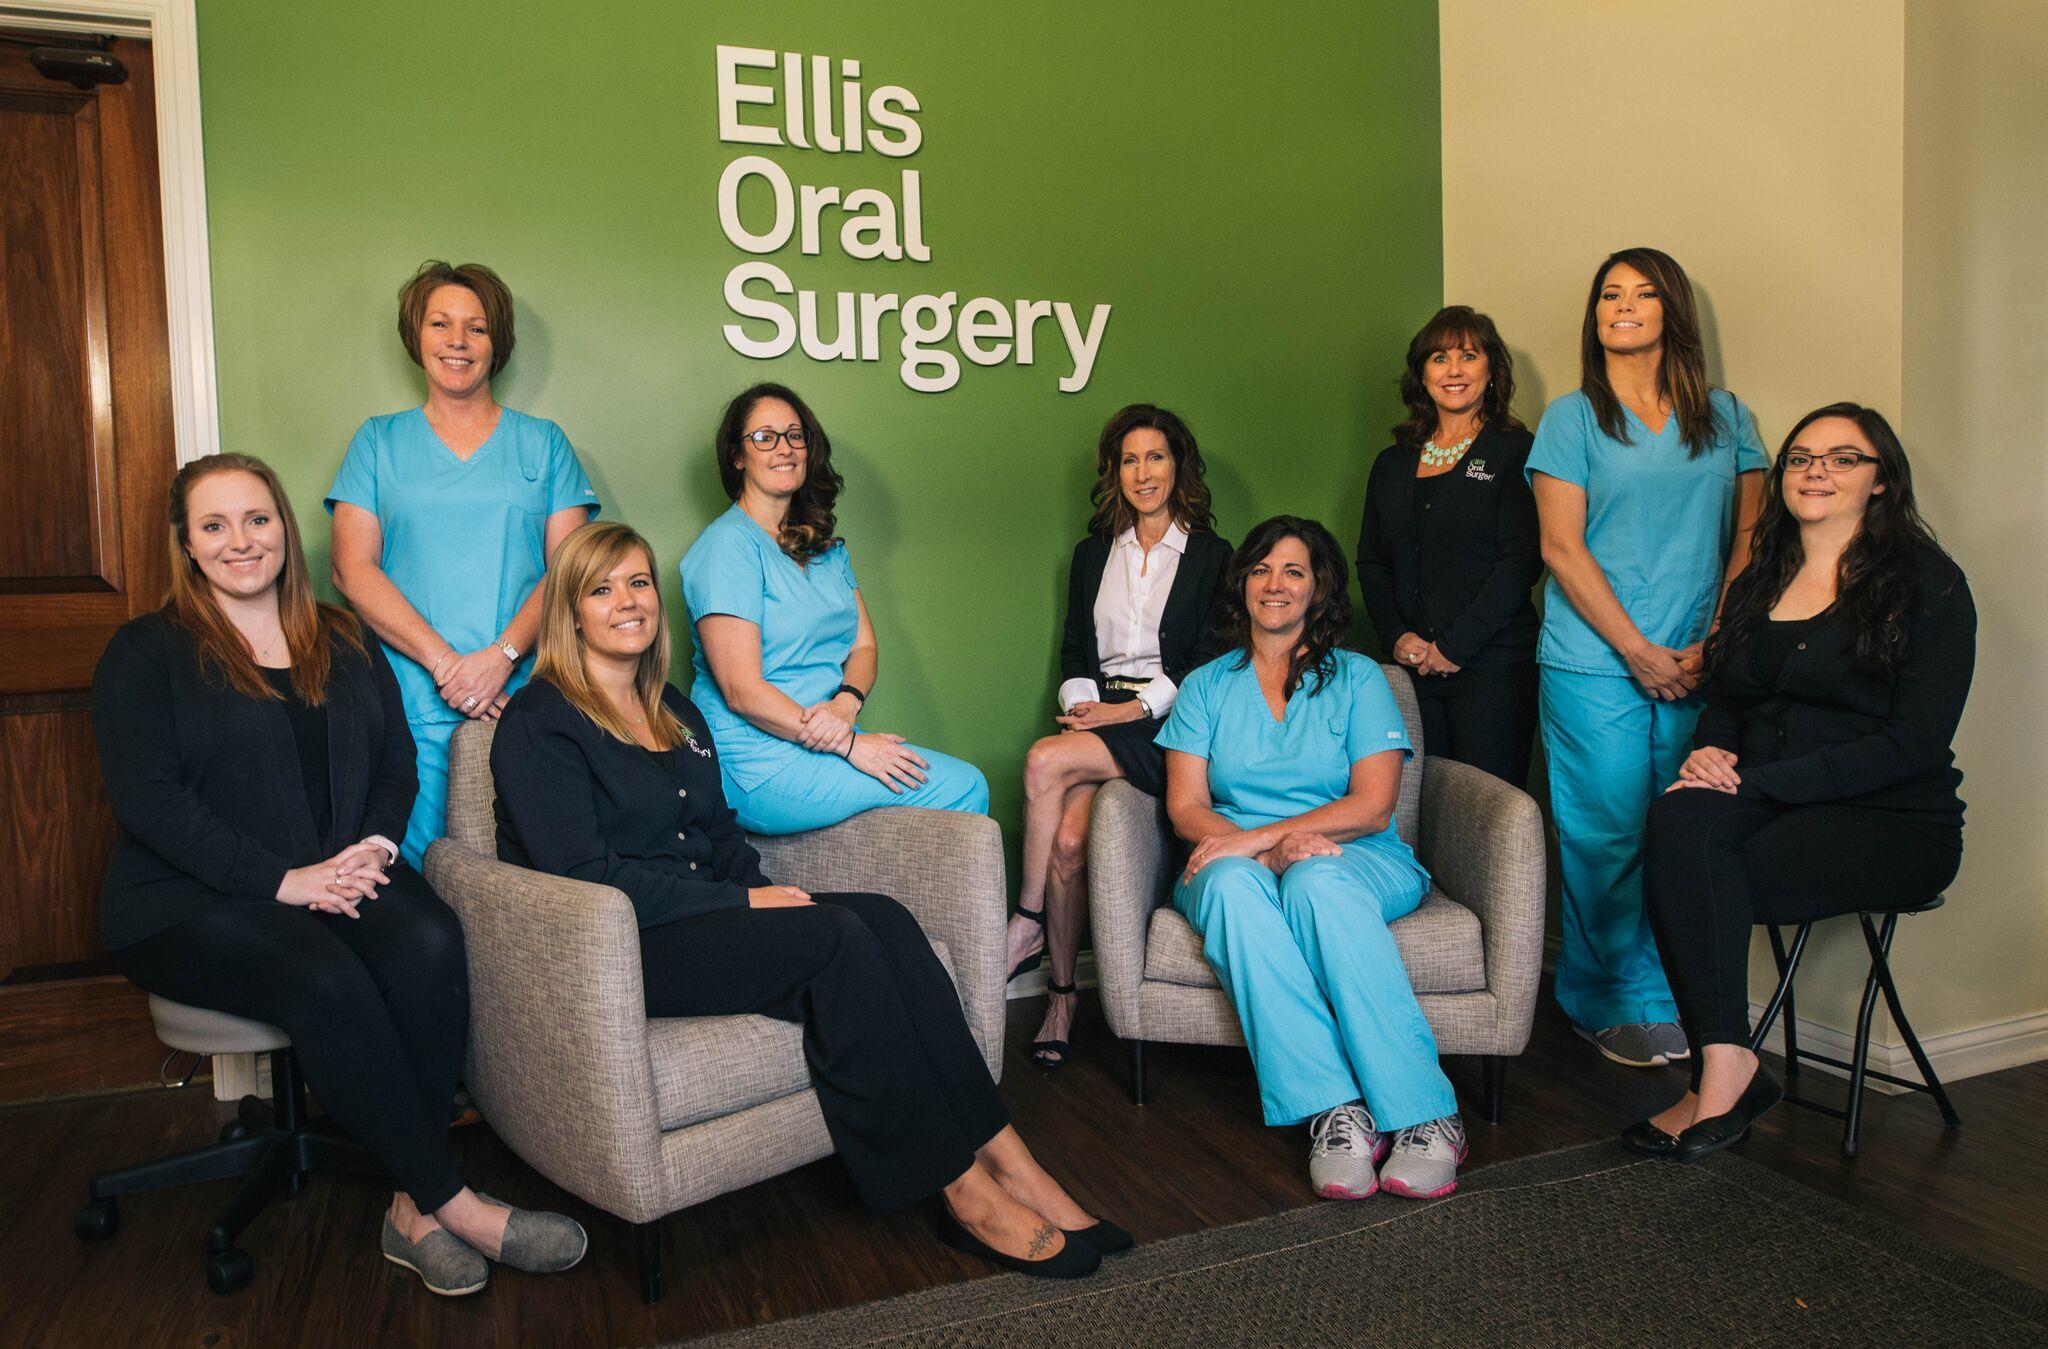 Ellis Oral Surgery Photo